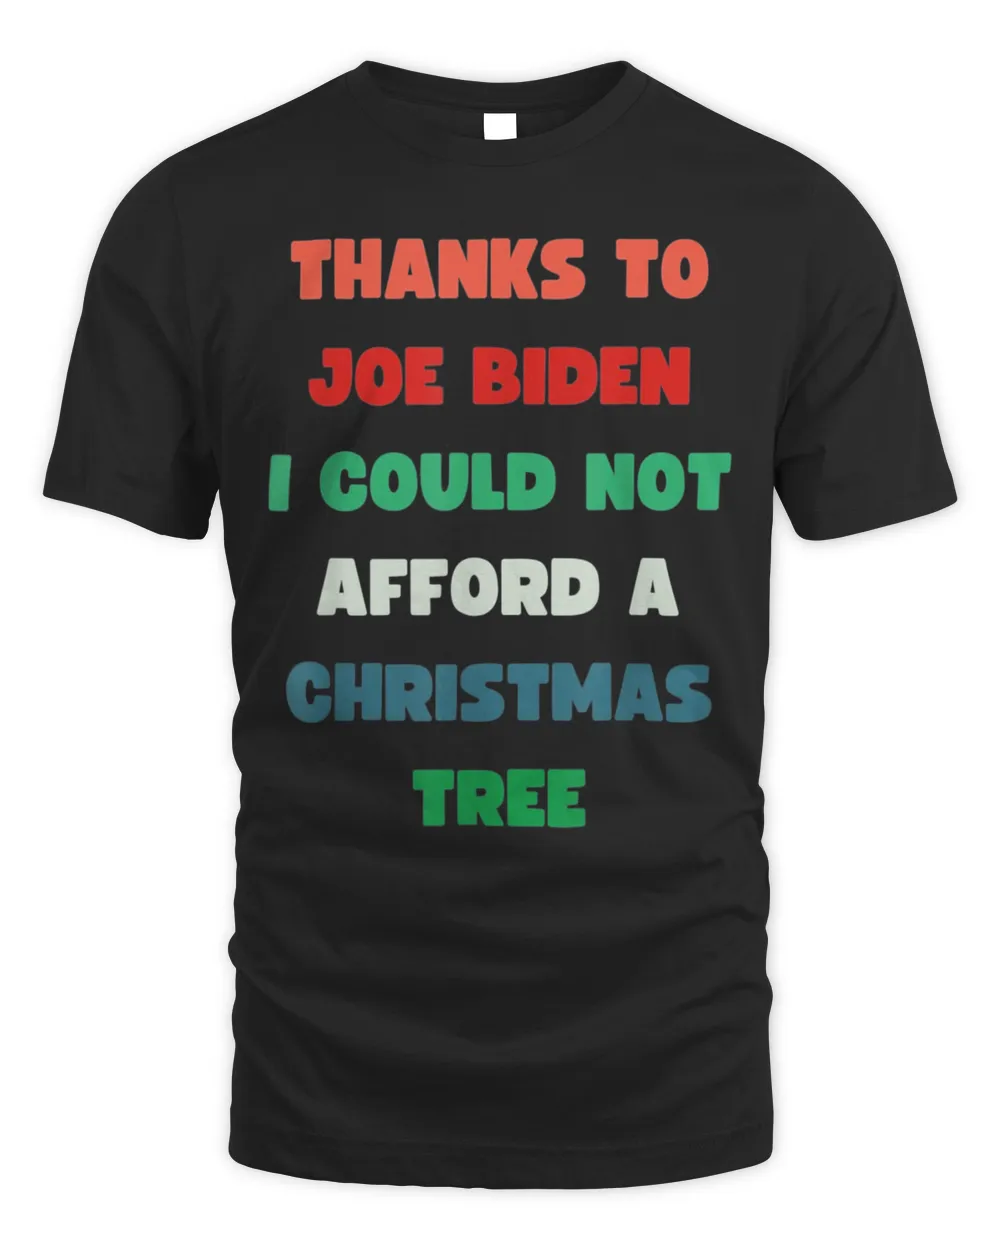 Thanks to Joe Biden I Could Not Aford A Christmas Tree T-Shirt